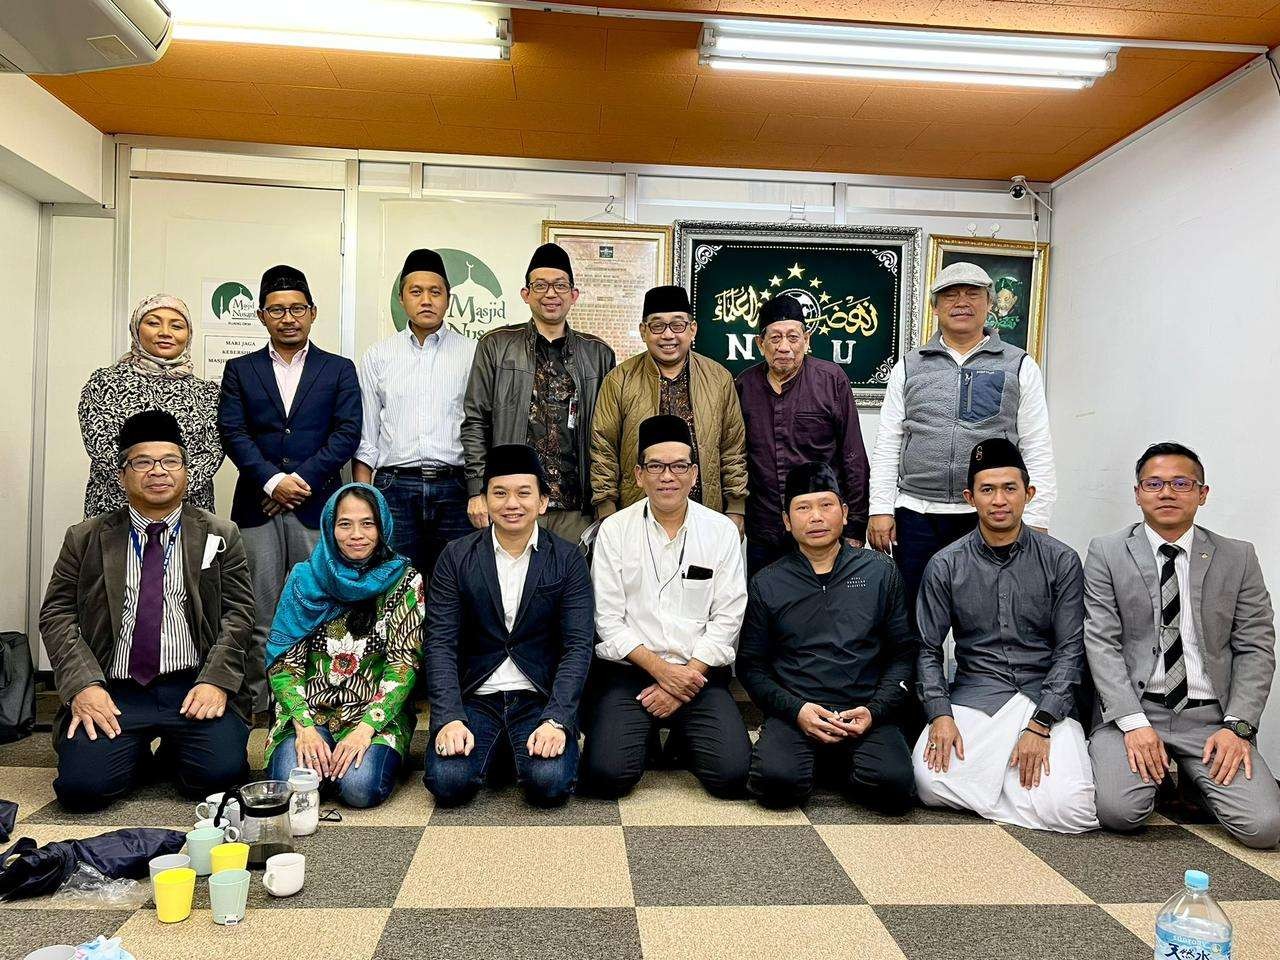 Pertemuan Arif Afandi (tiga dari kanan belakang) dengan warga NU di Masjid Nusantara, usai salat Jumat, 18 November 2022. Masjid milik NU di Tokyo. (Foto: Dokumentasi pribadi)